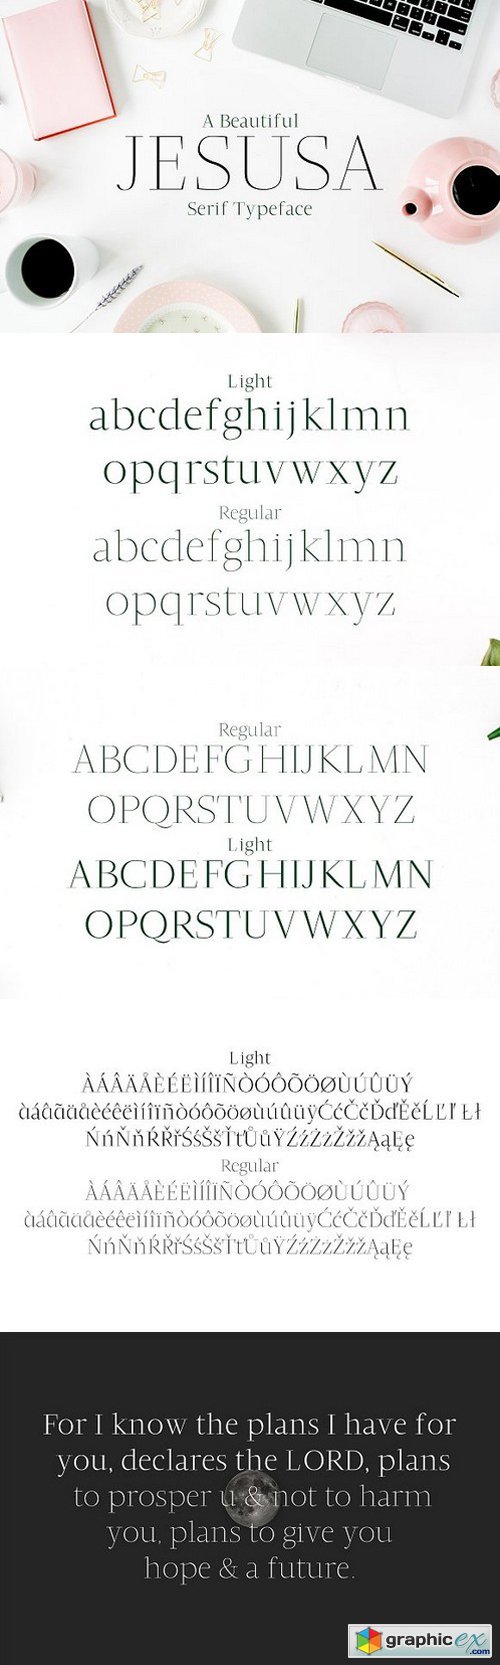 Jesusa Serif Typeface